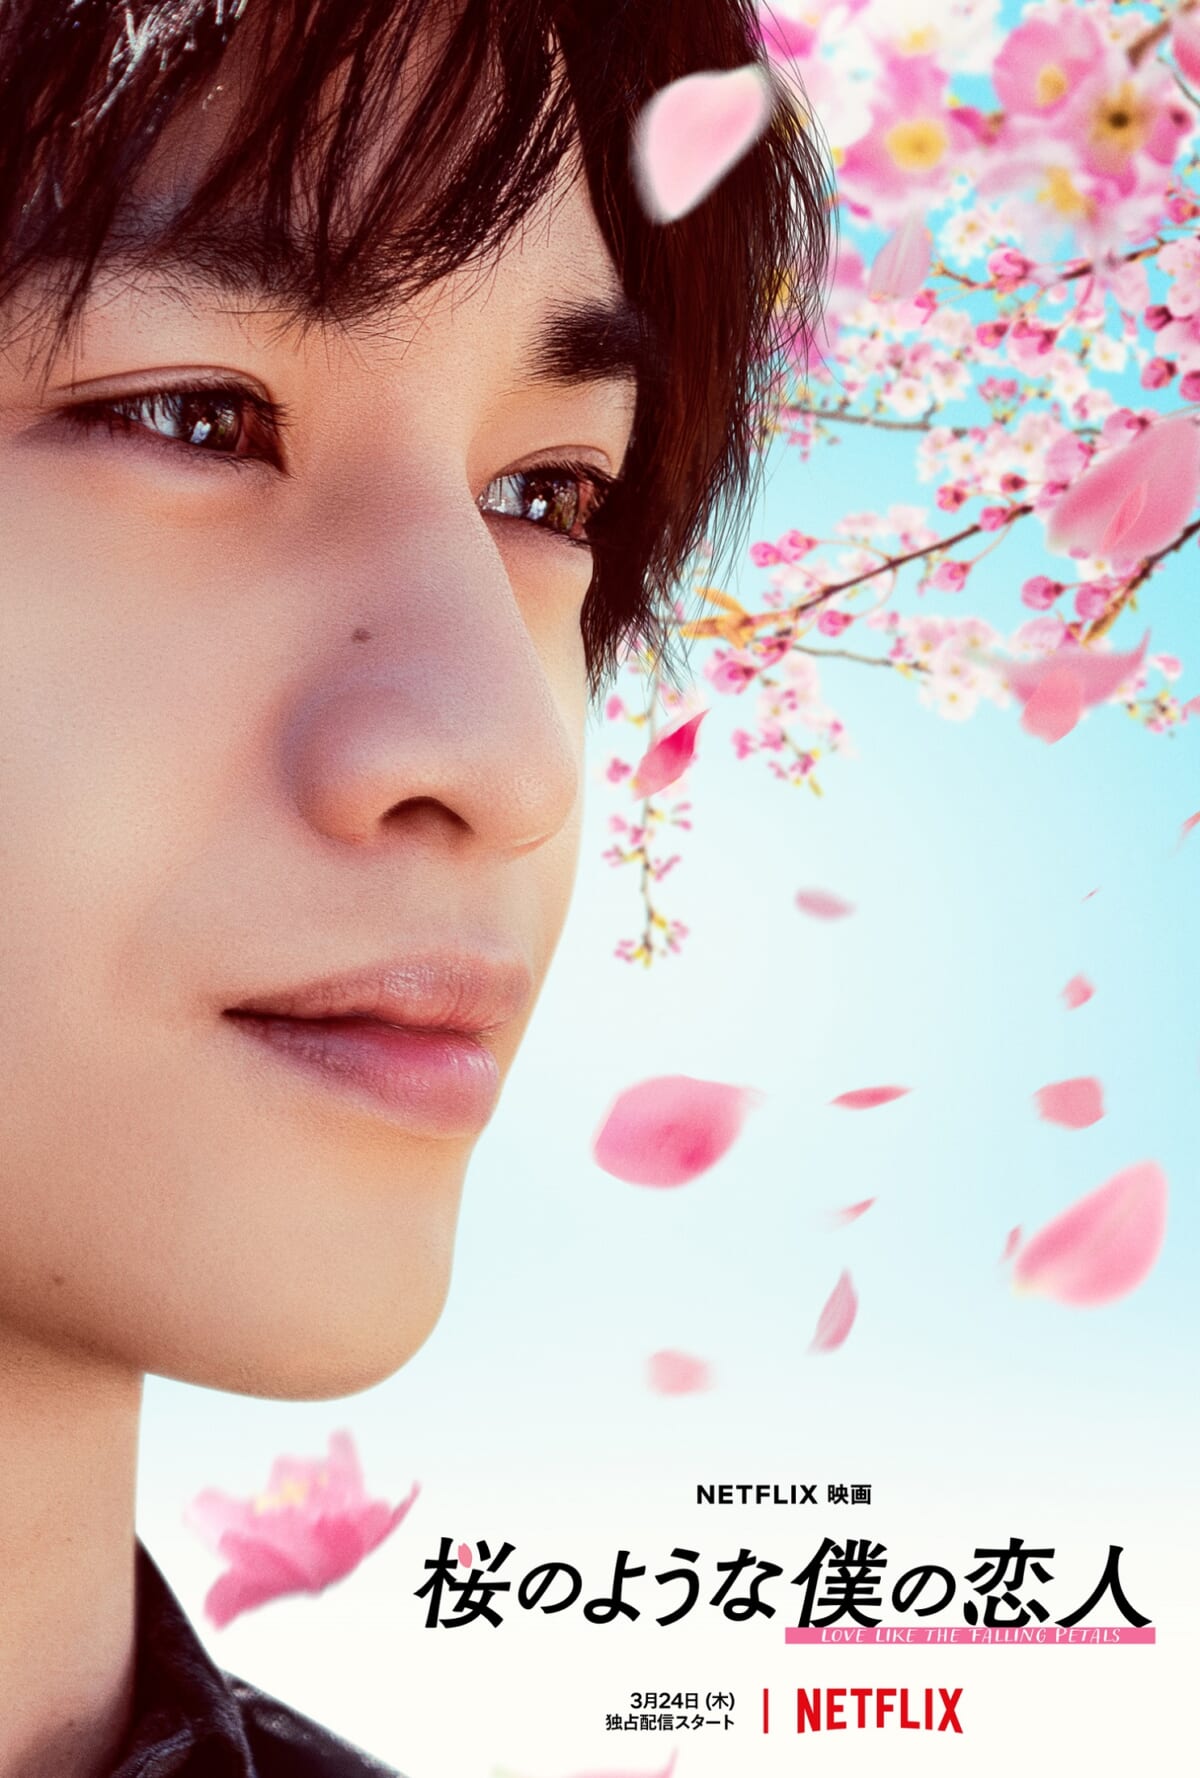 Netflix映画「桜のような僕の恋人」